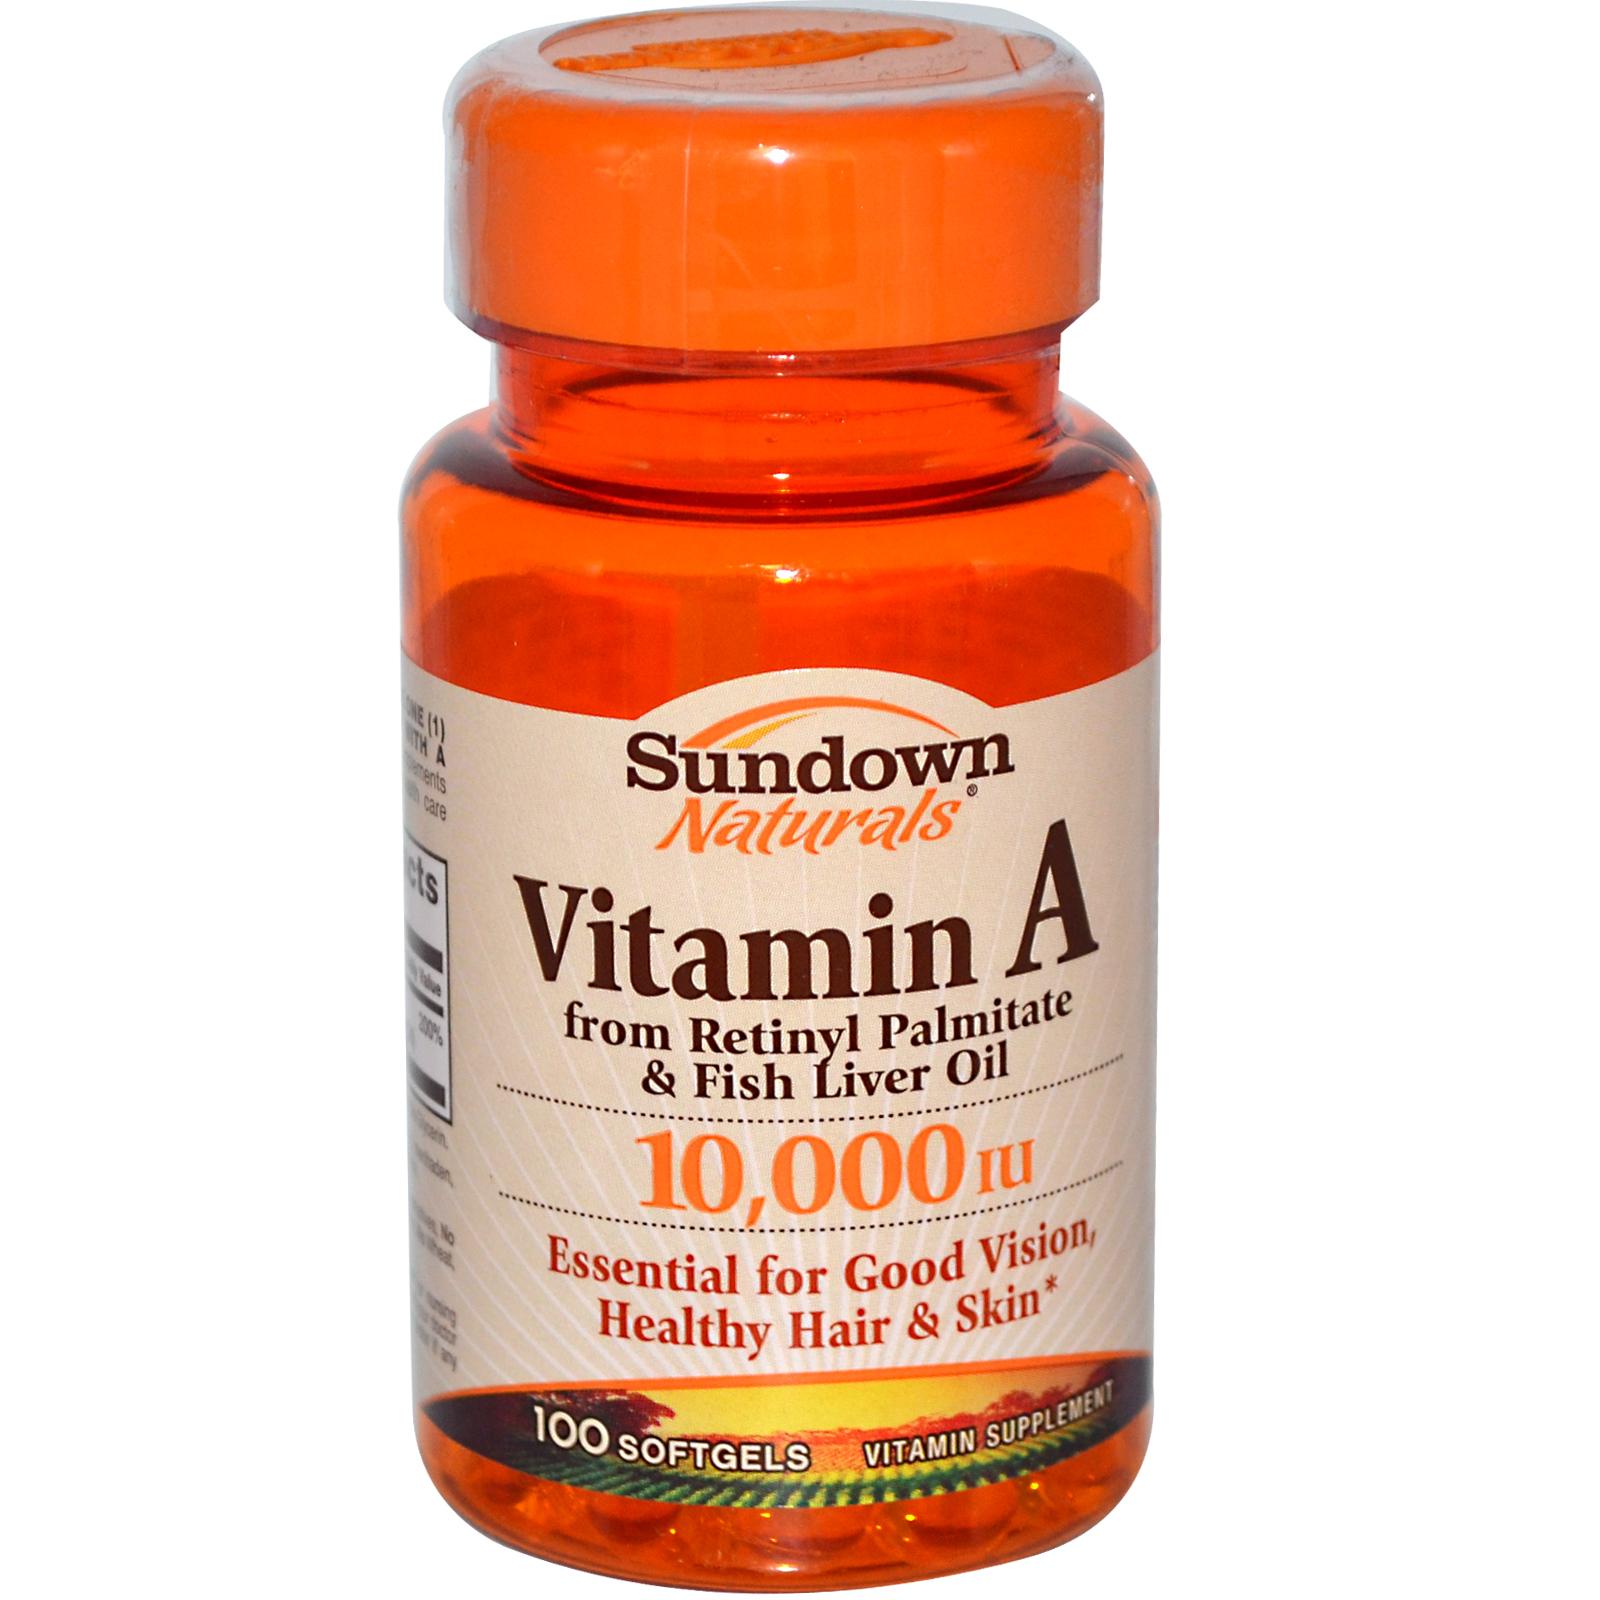 Vitamin a and hair